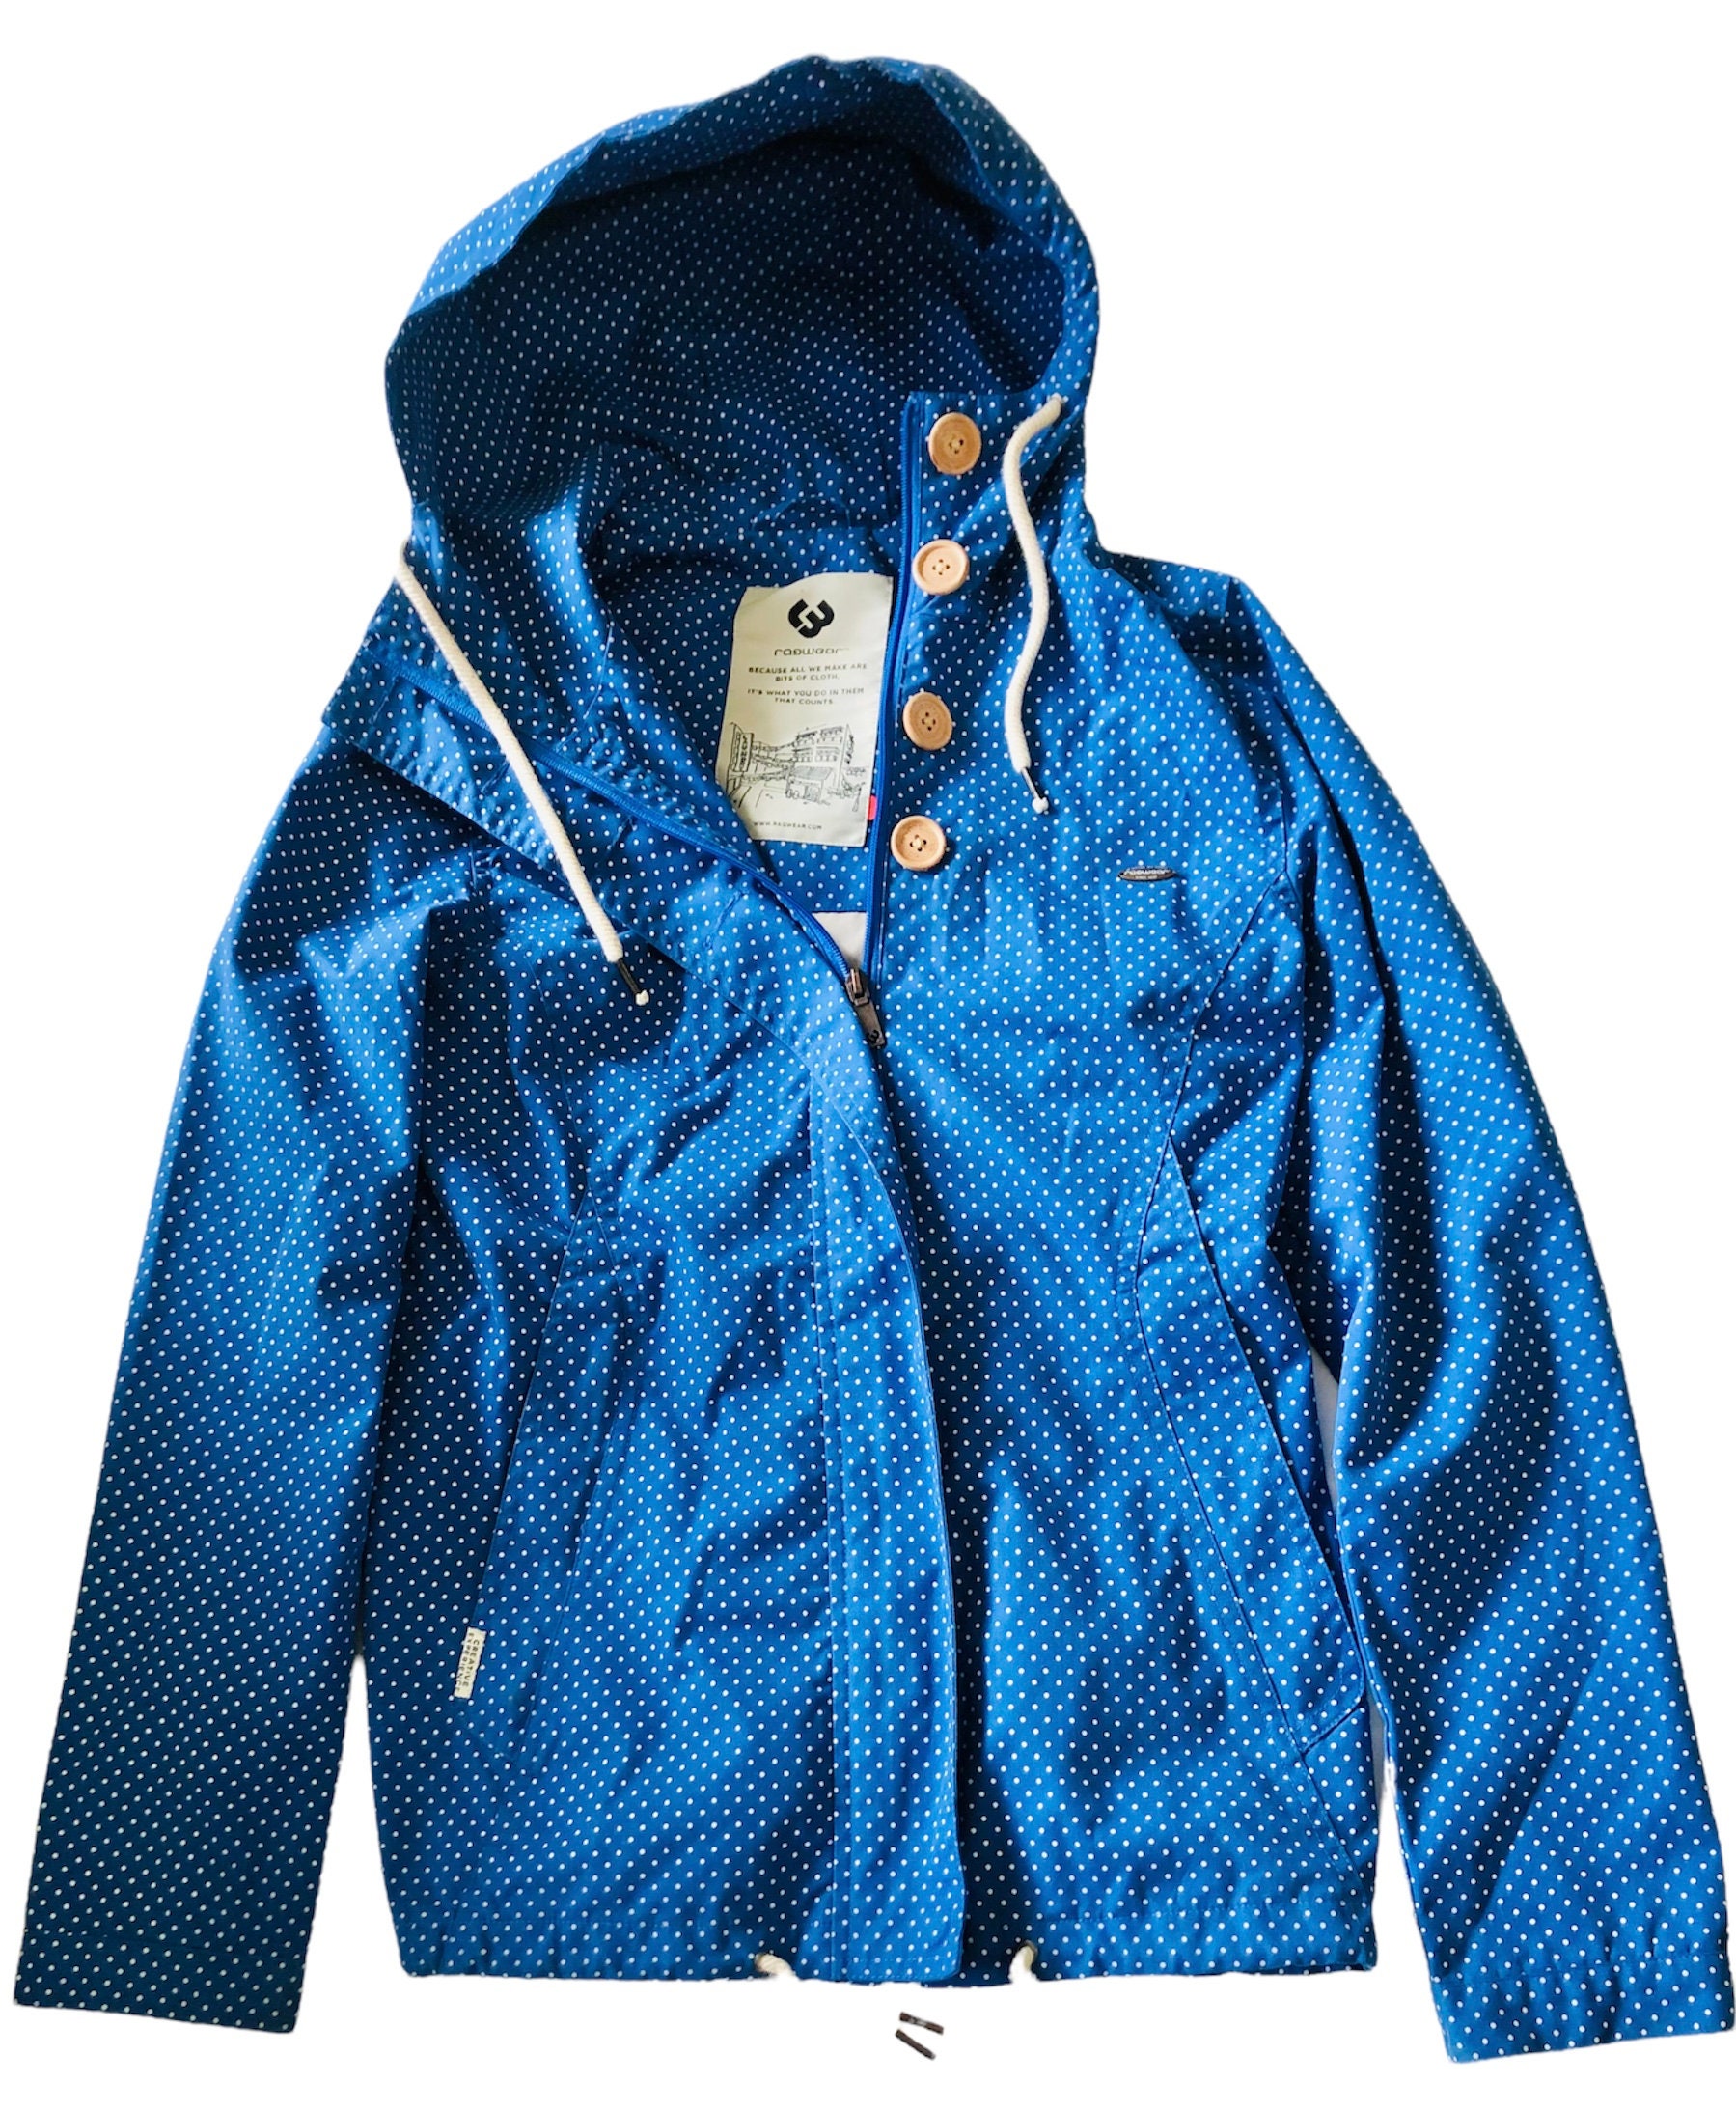 Ragwear Blue Polka Dot Coat Jacket Womens Size Small Zip up Buttons Rain  Fall Spring Light - Etsy Denmark